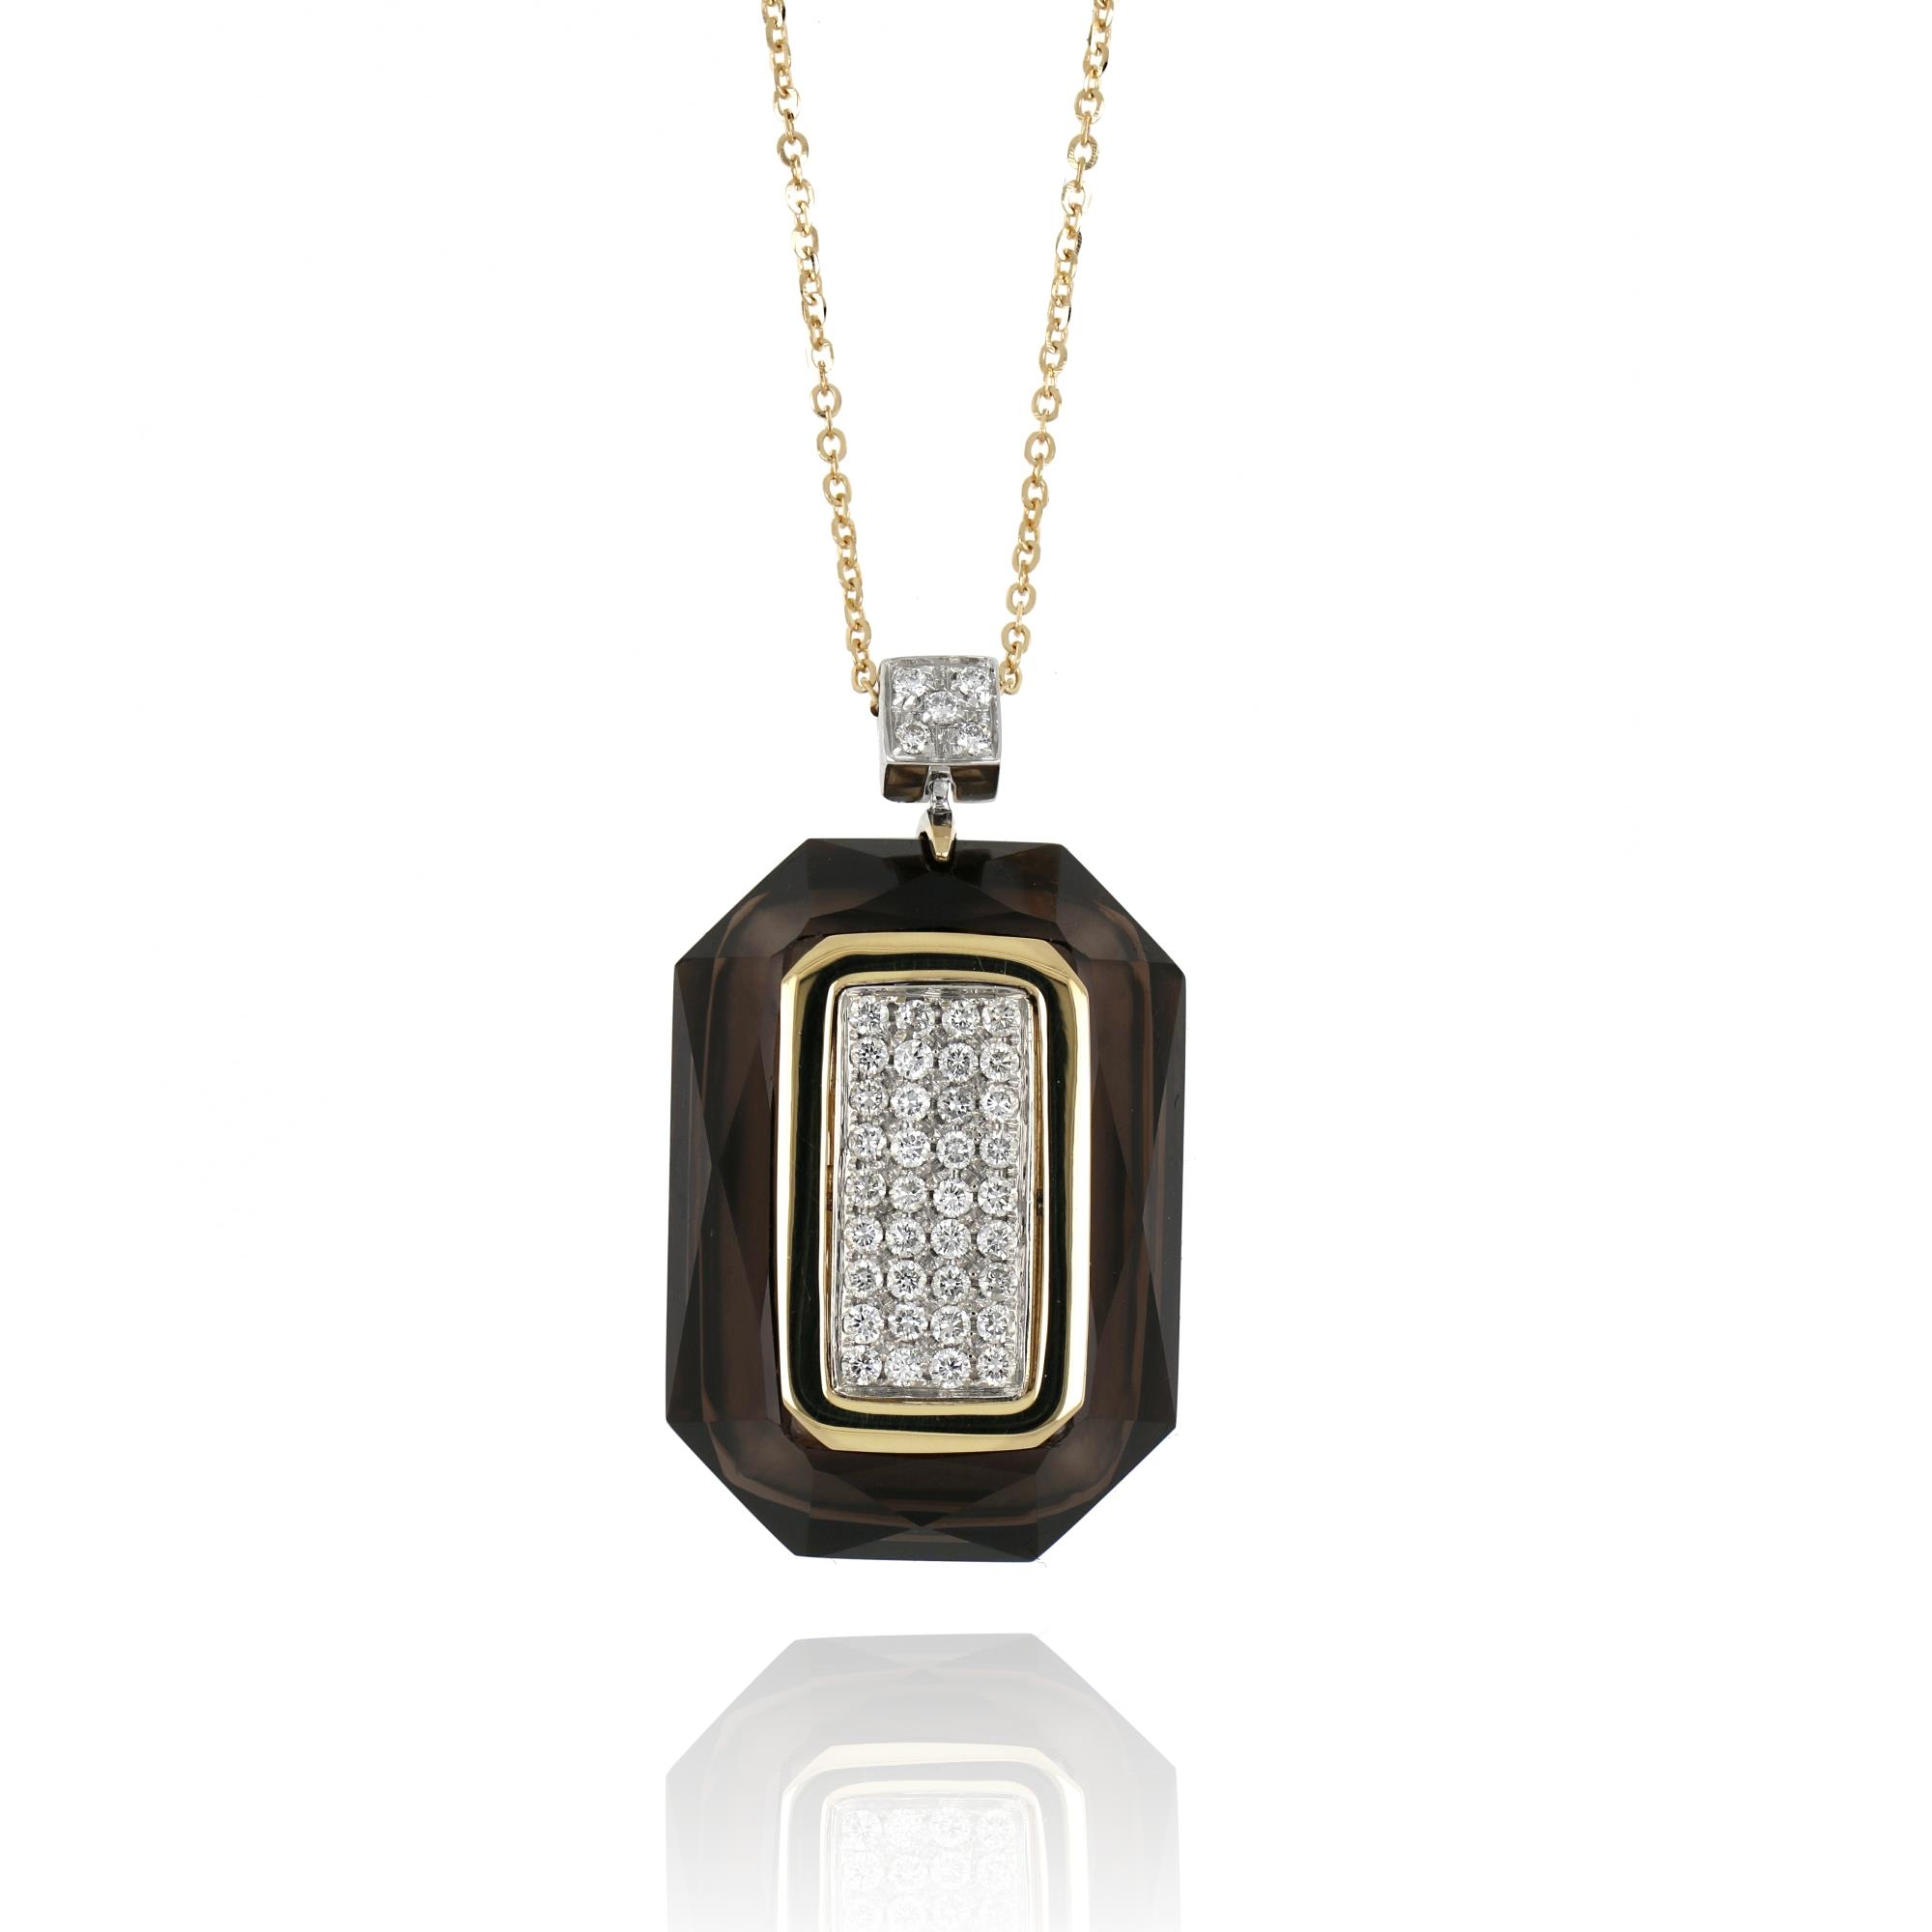 Gold necklace with smoky quartz and diamonds - GOLD ART